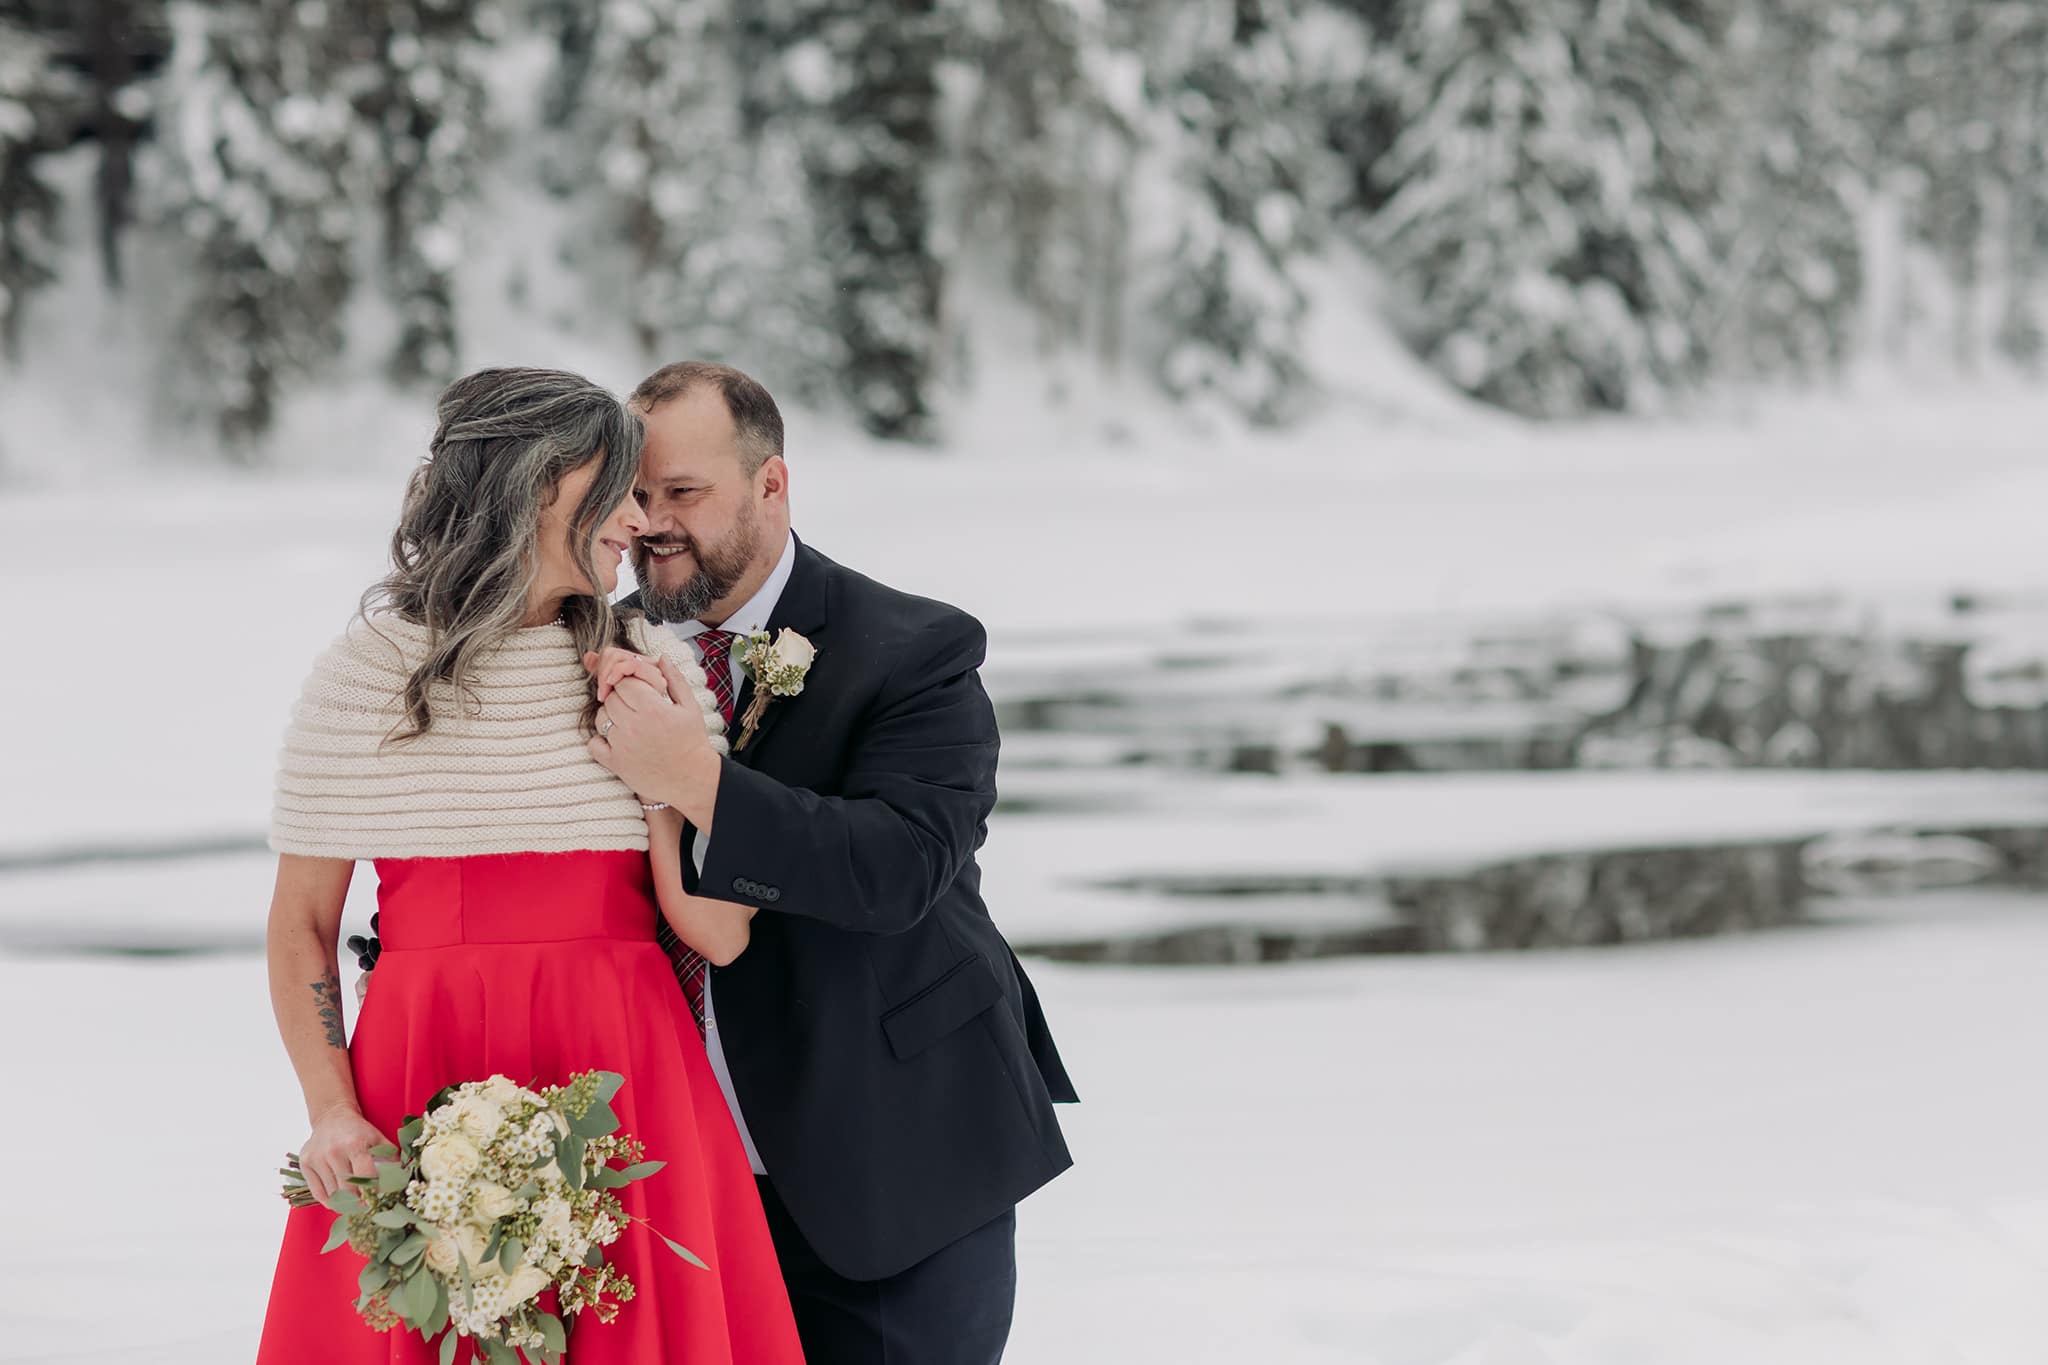 Emerald Lake Lodge Winter elopement bridal groom wedding portraits in the snow